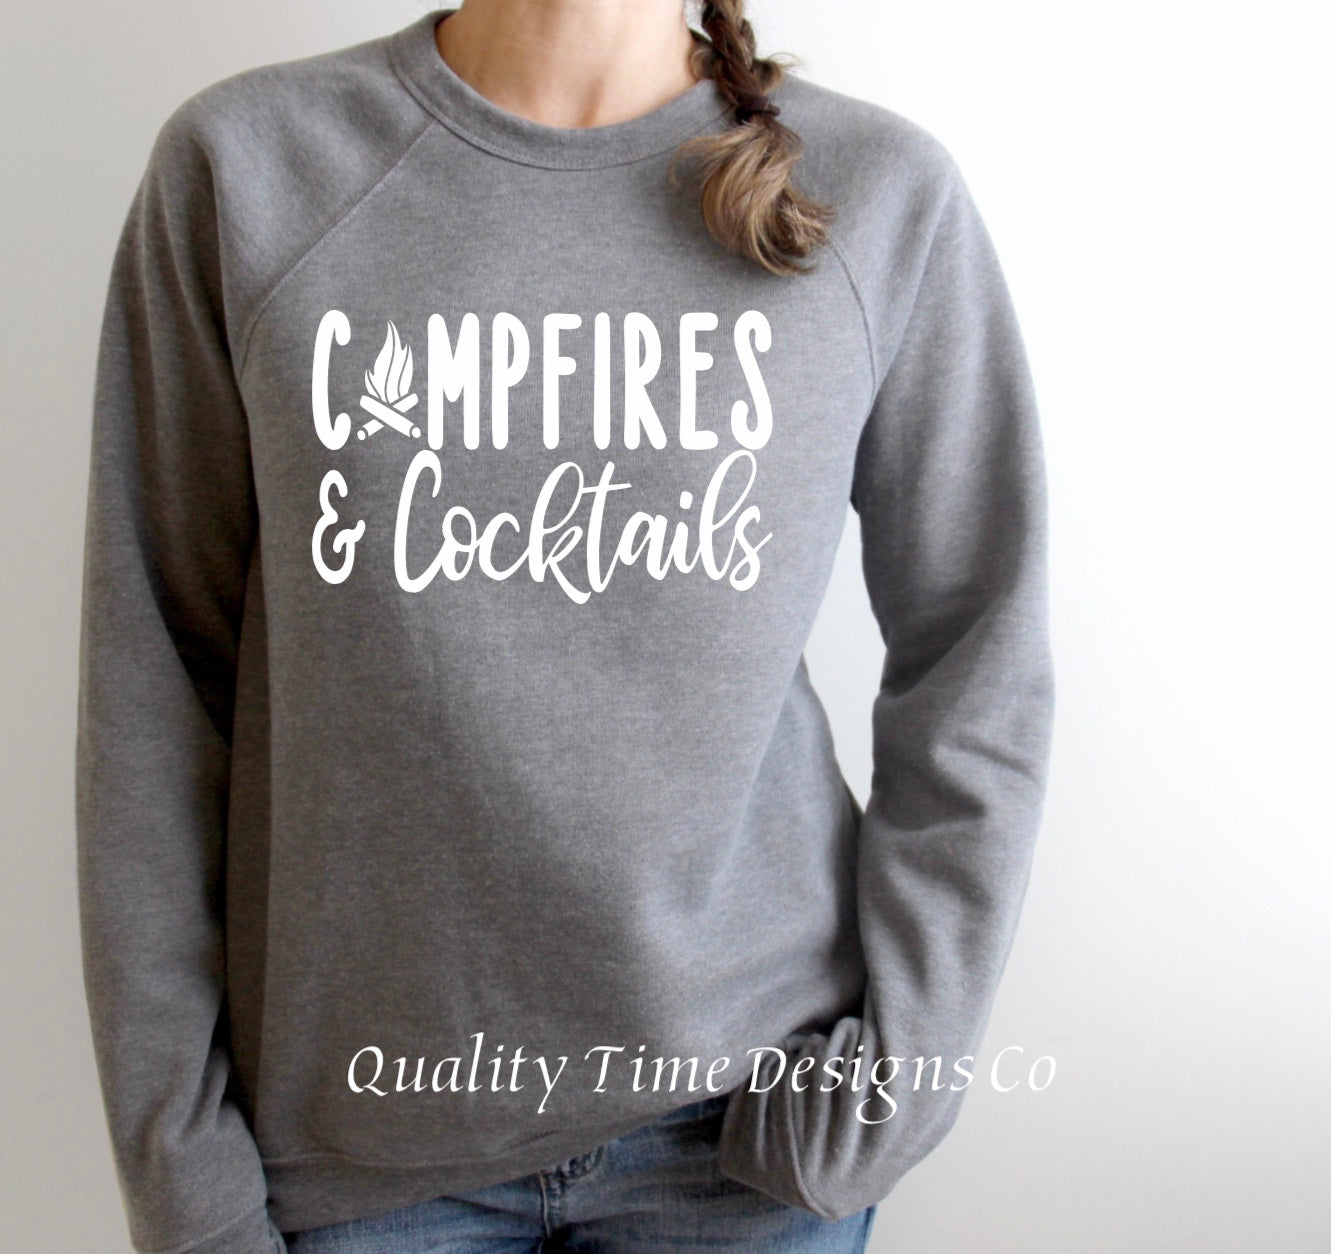 Campfires and Cocktails sweatshirt 